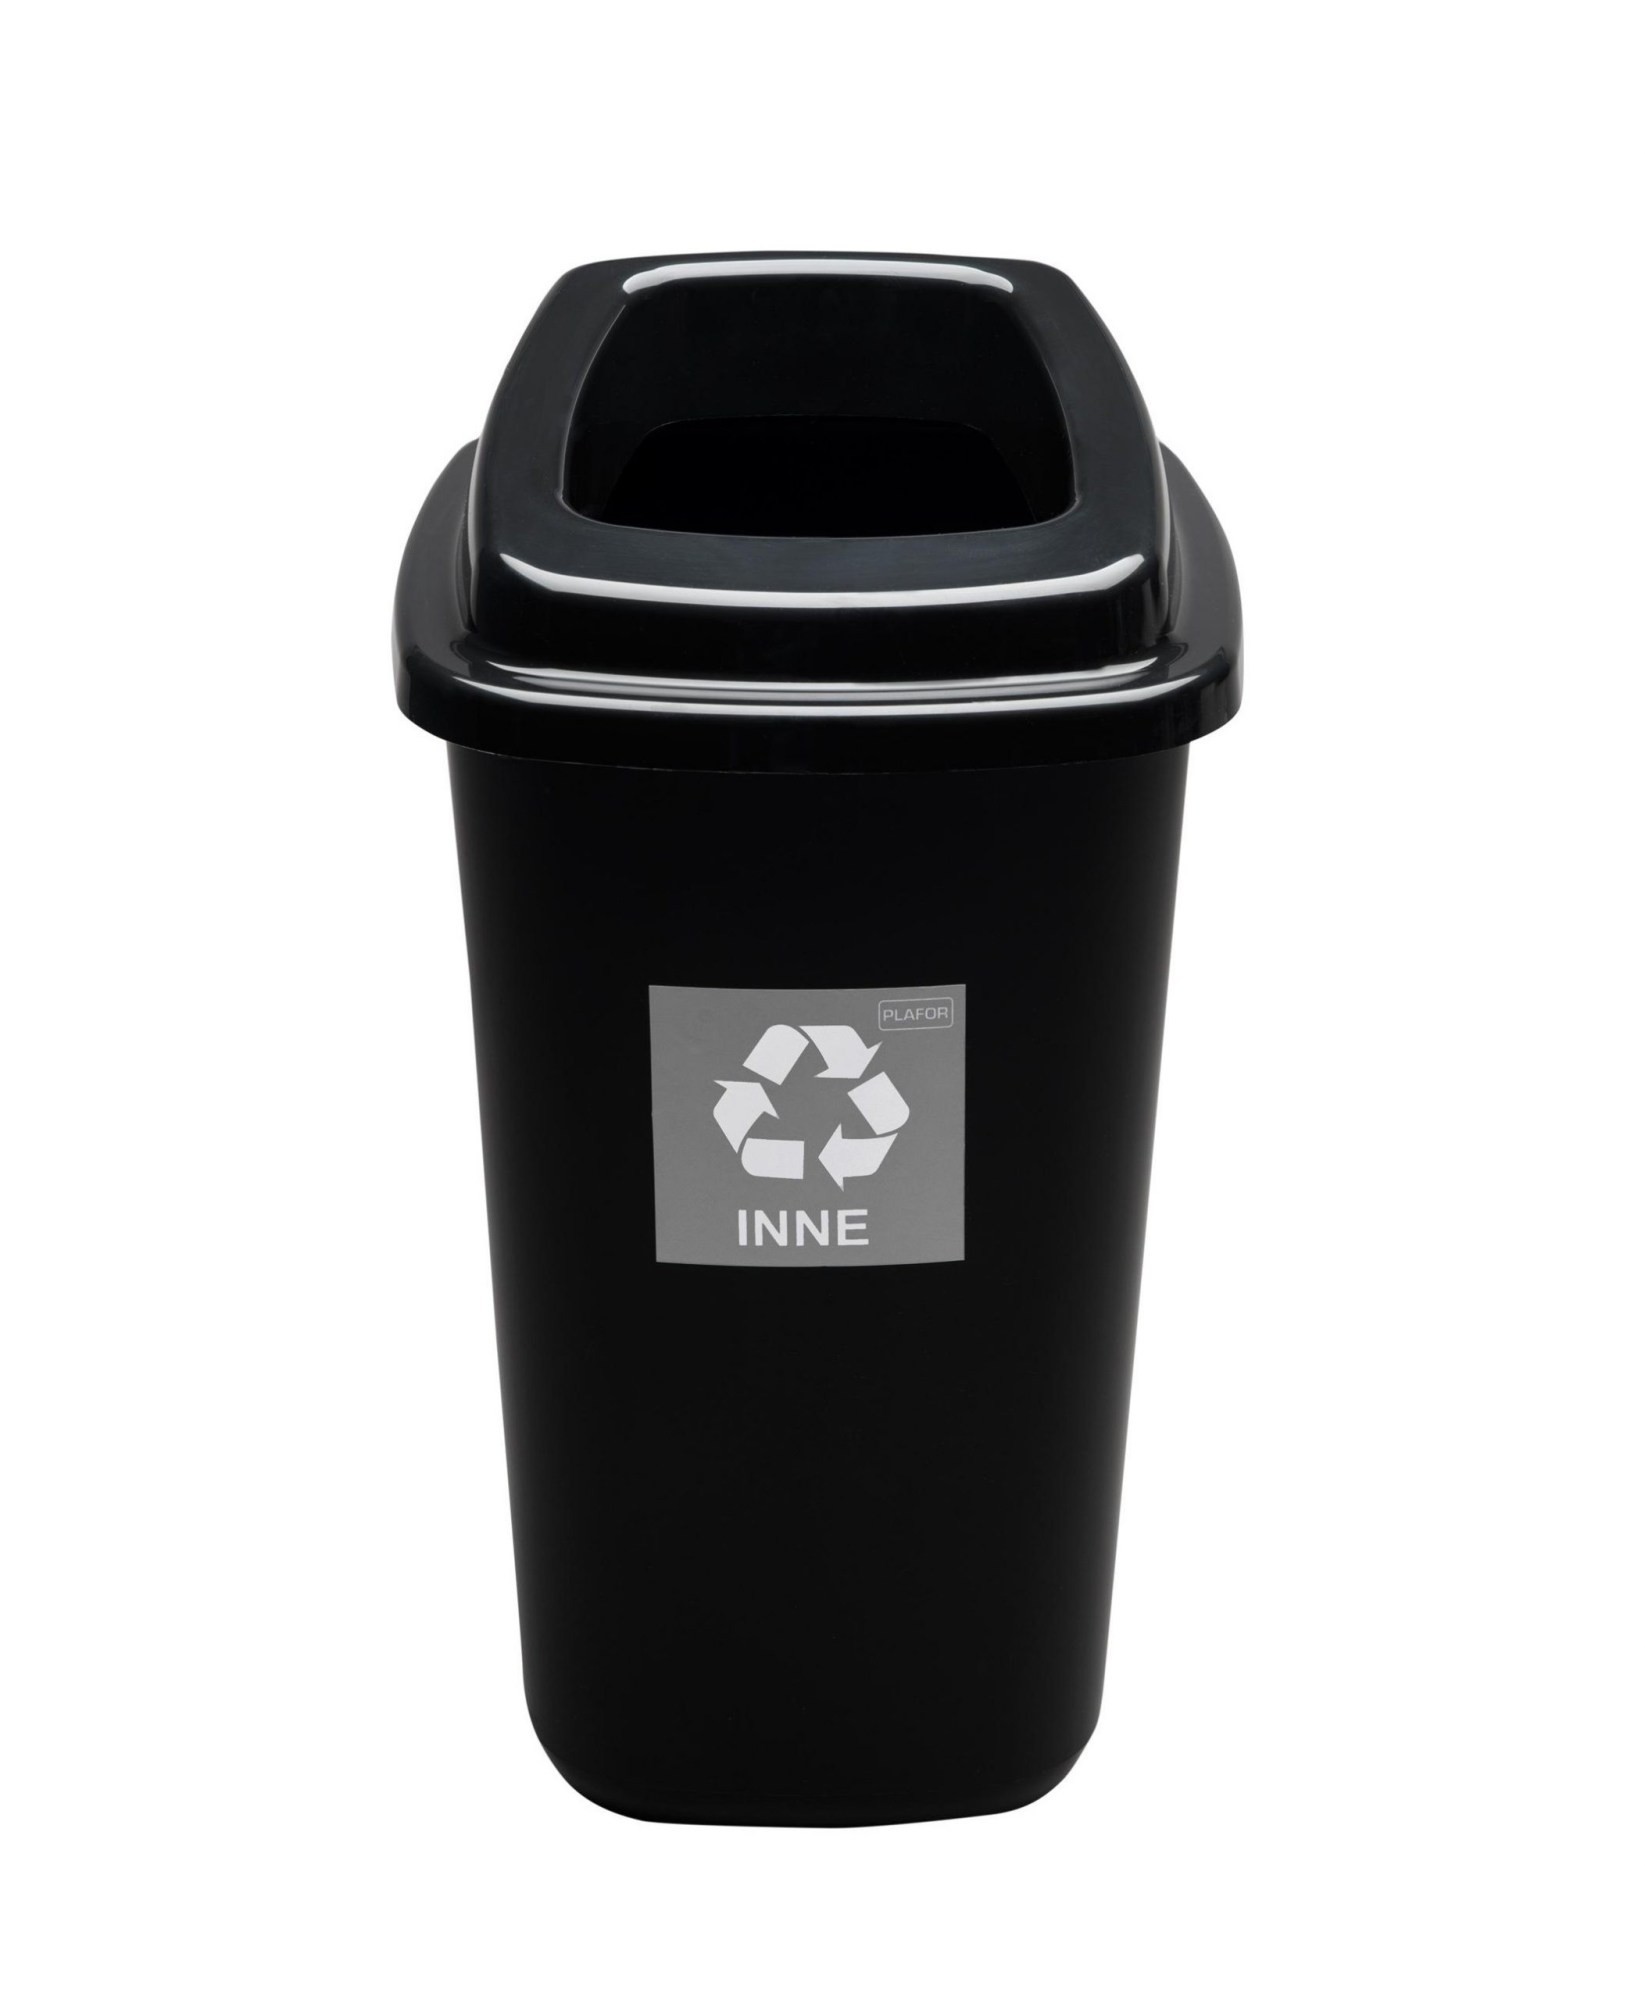 Cos plastic reciclare selectiva, capacitate 45l, PLAFOR Sort - negru cu capac negru - altele